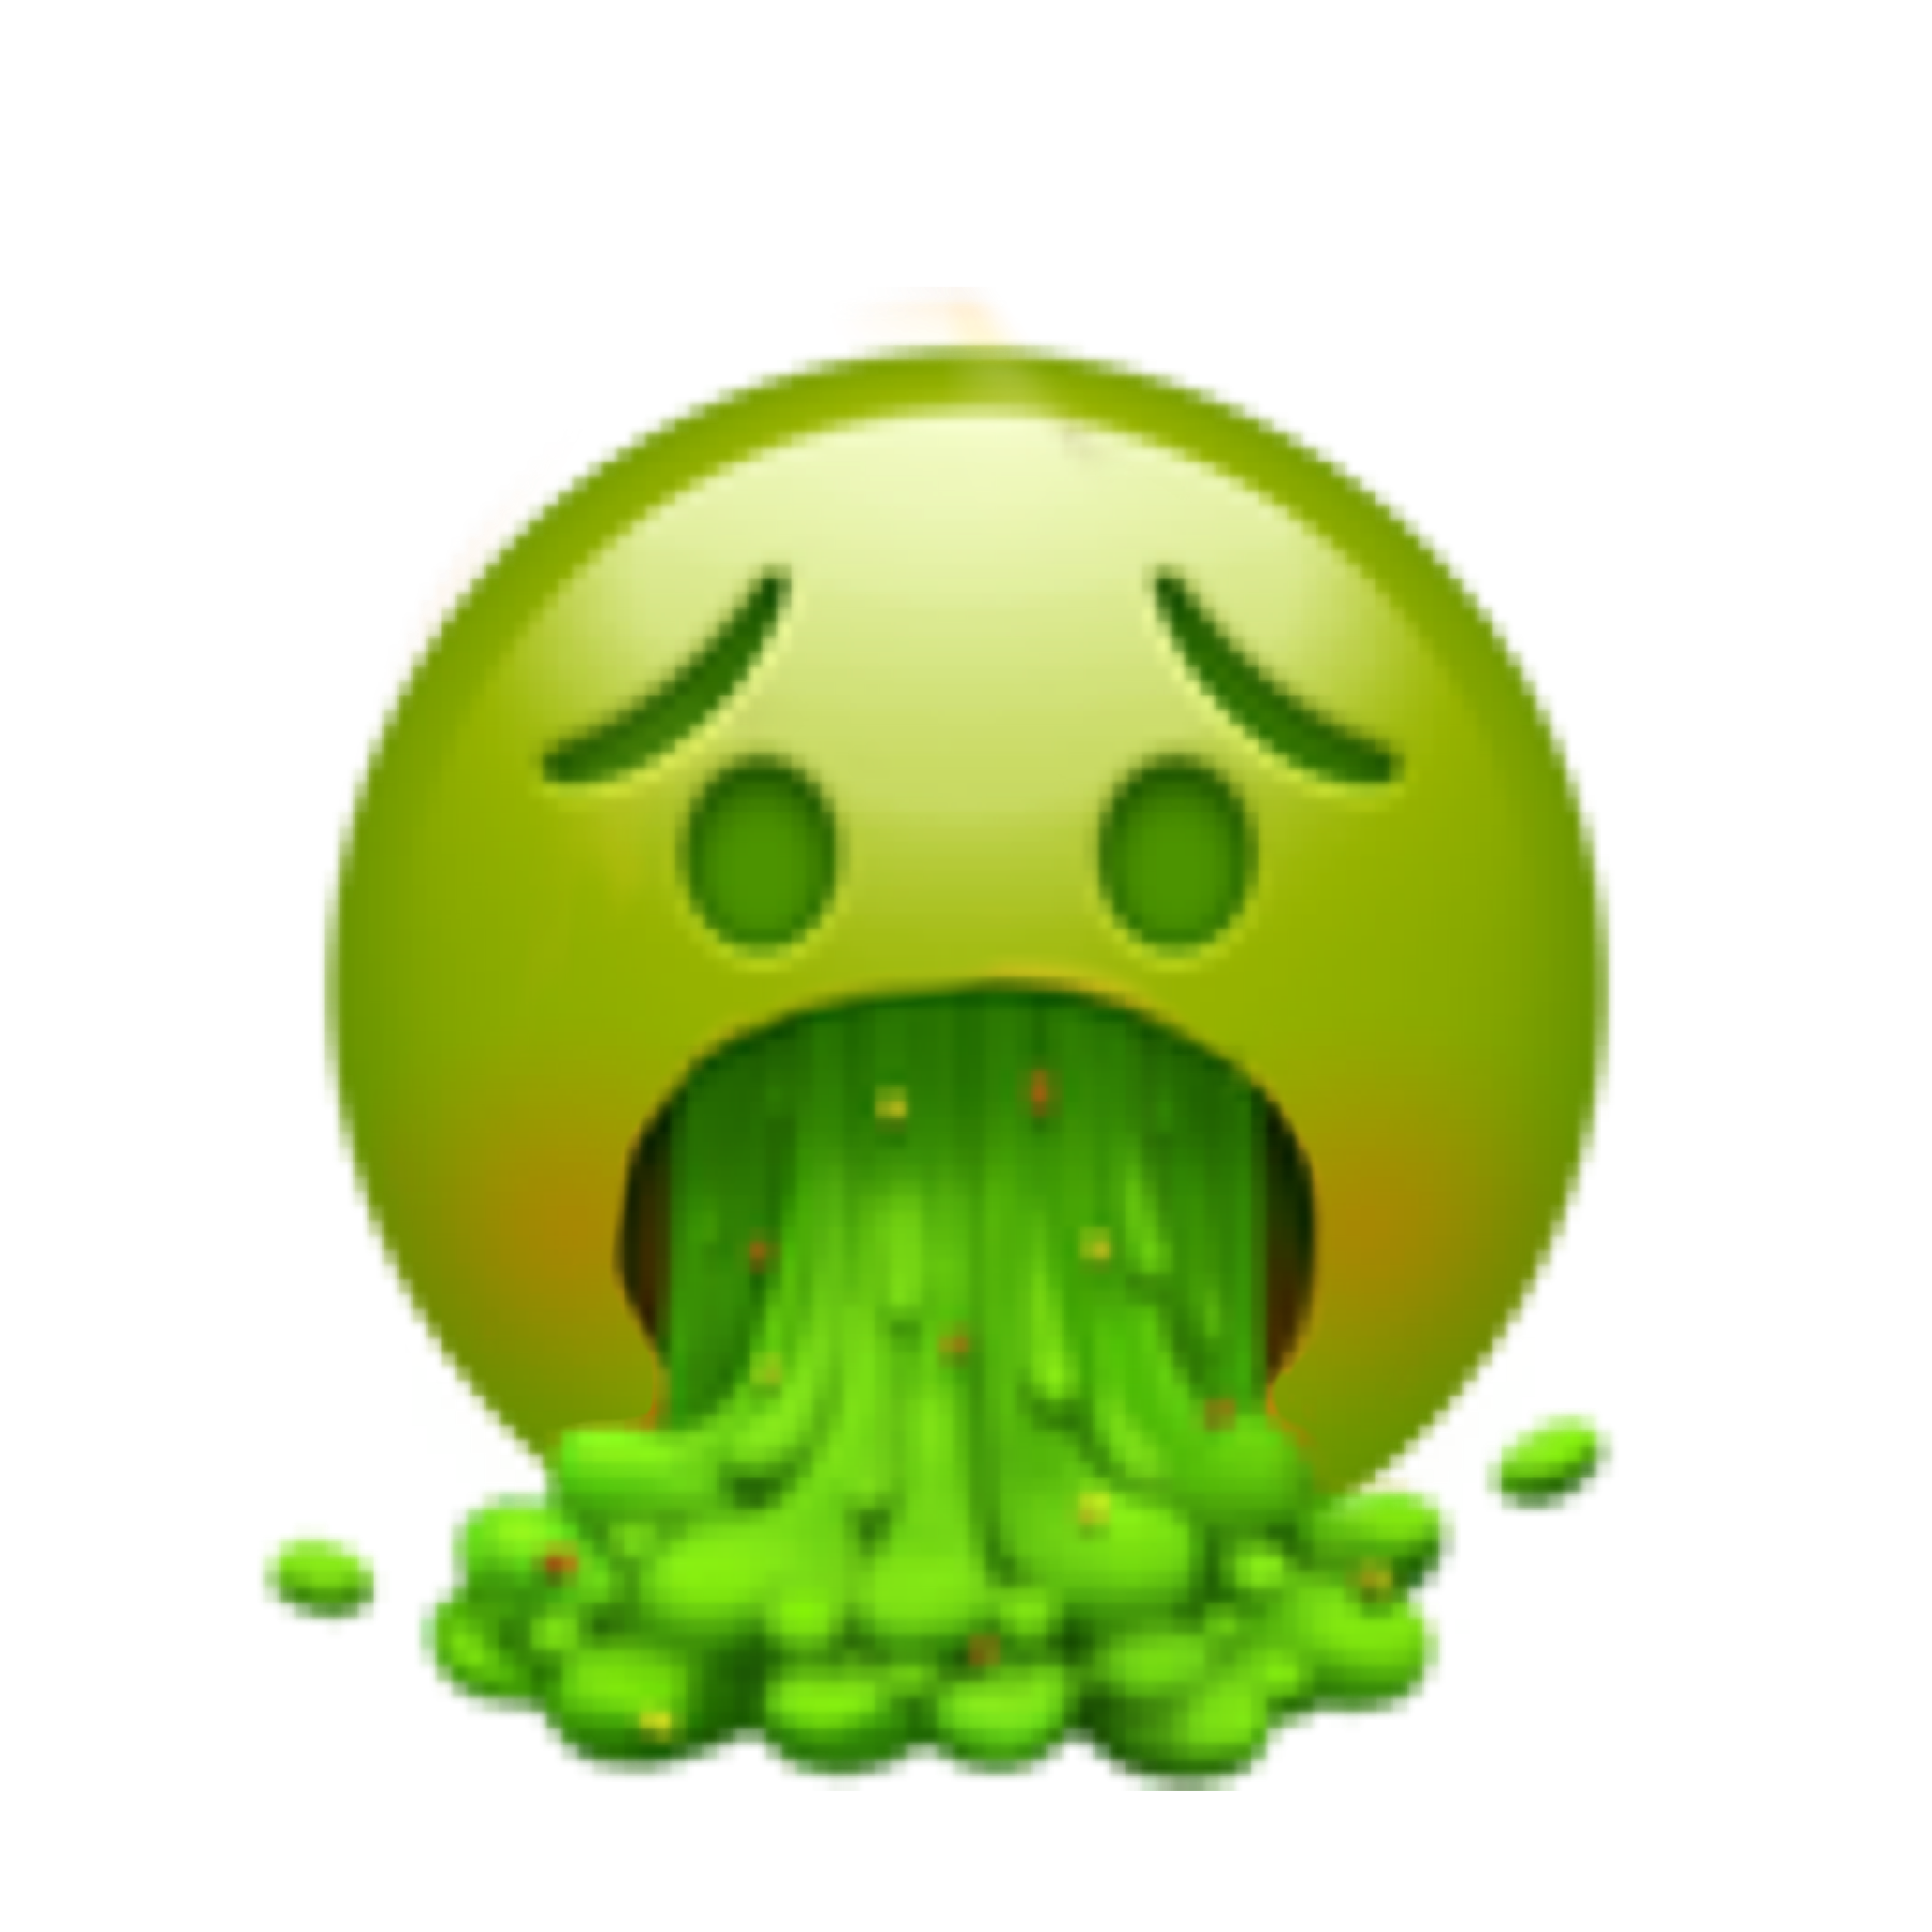 This visual is about sick ew emoji puke freetoedit #sick #ew #emoji #puke #...